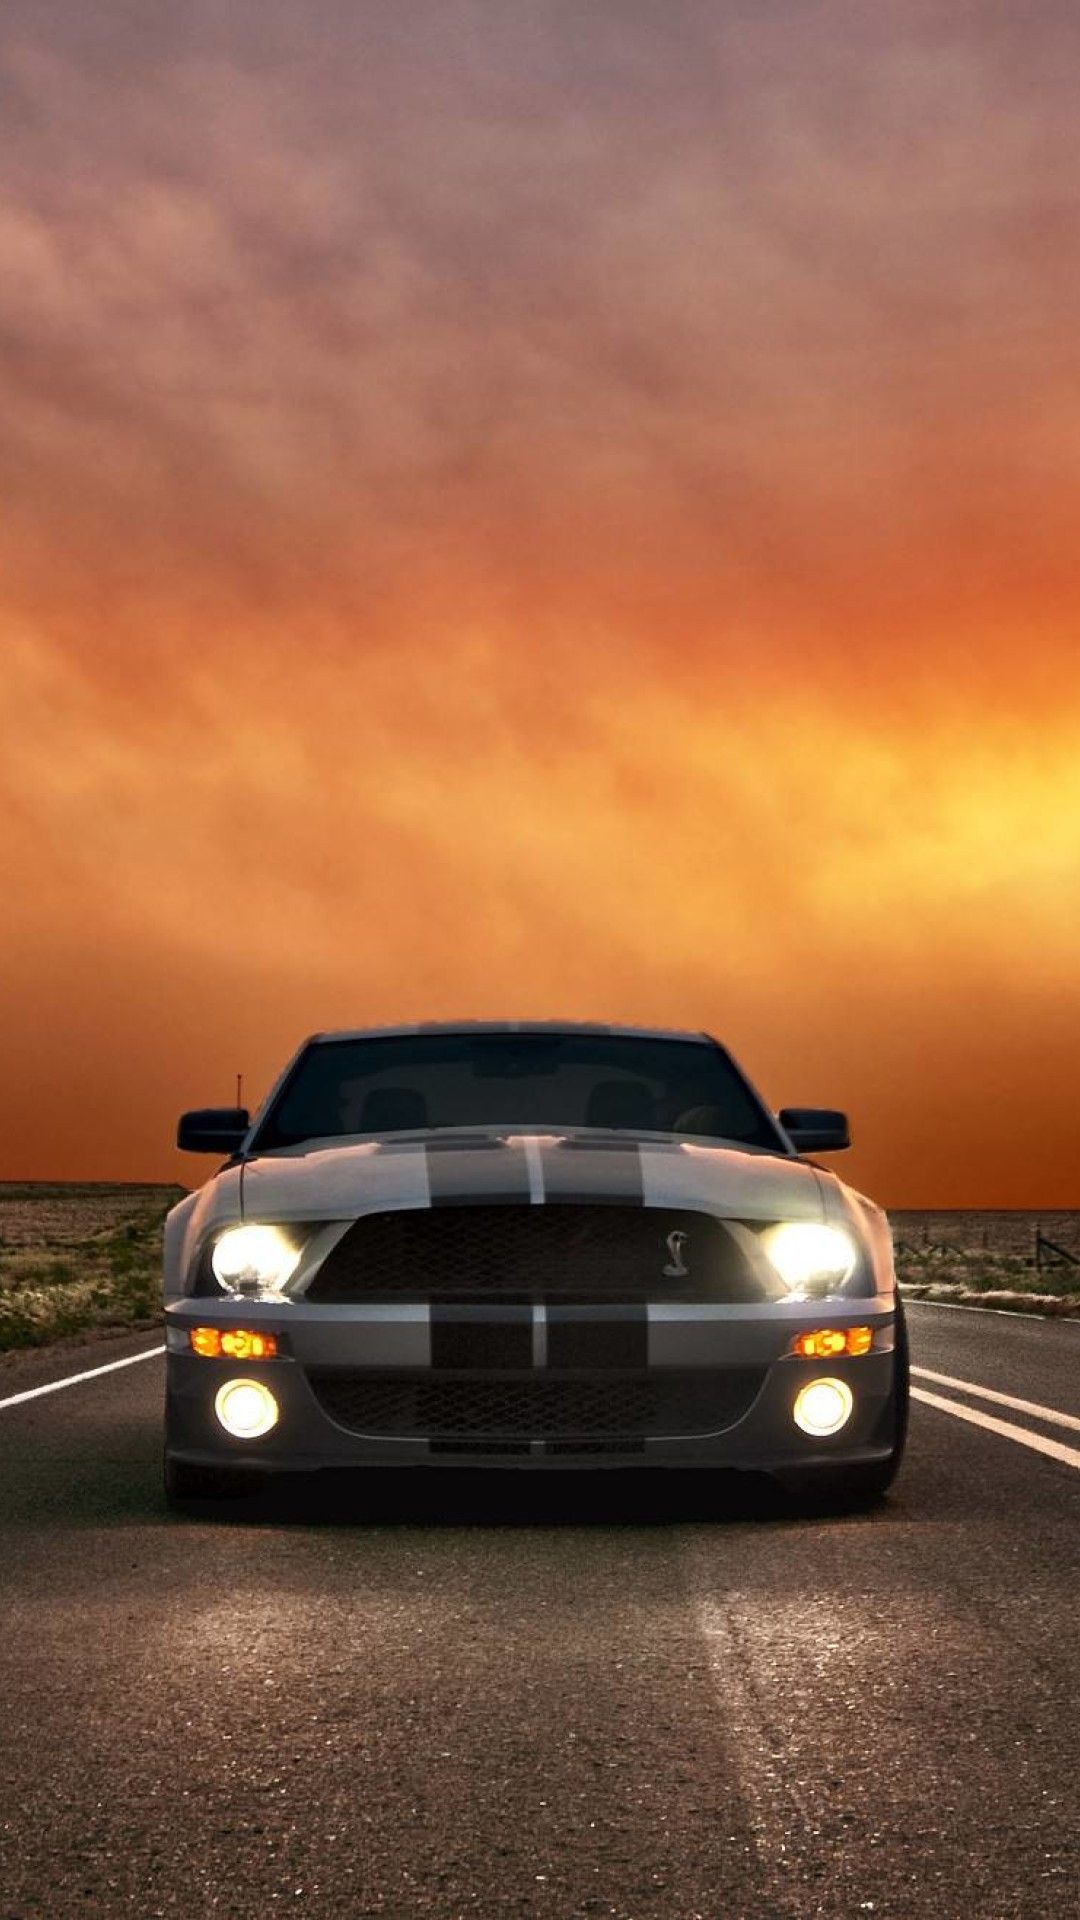 Full HD Mustang iPhone Wallpaper. ipcwallpaper. Mustang wallpaper, Black mustang, Ford mustang car